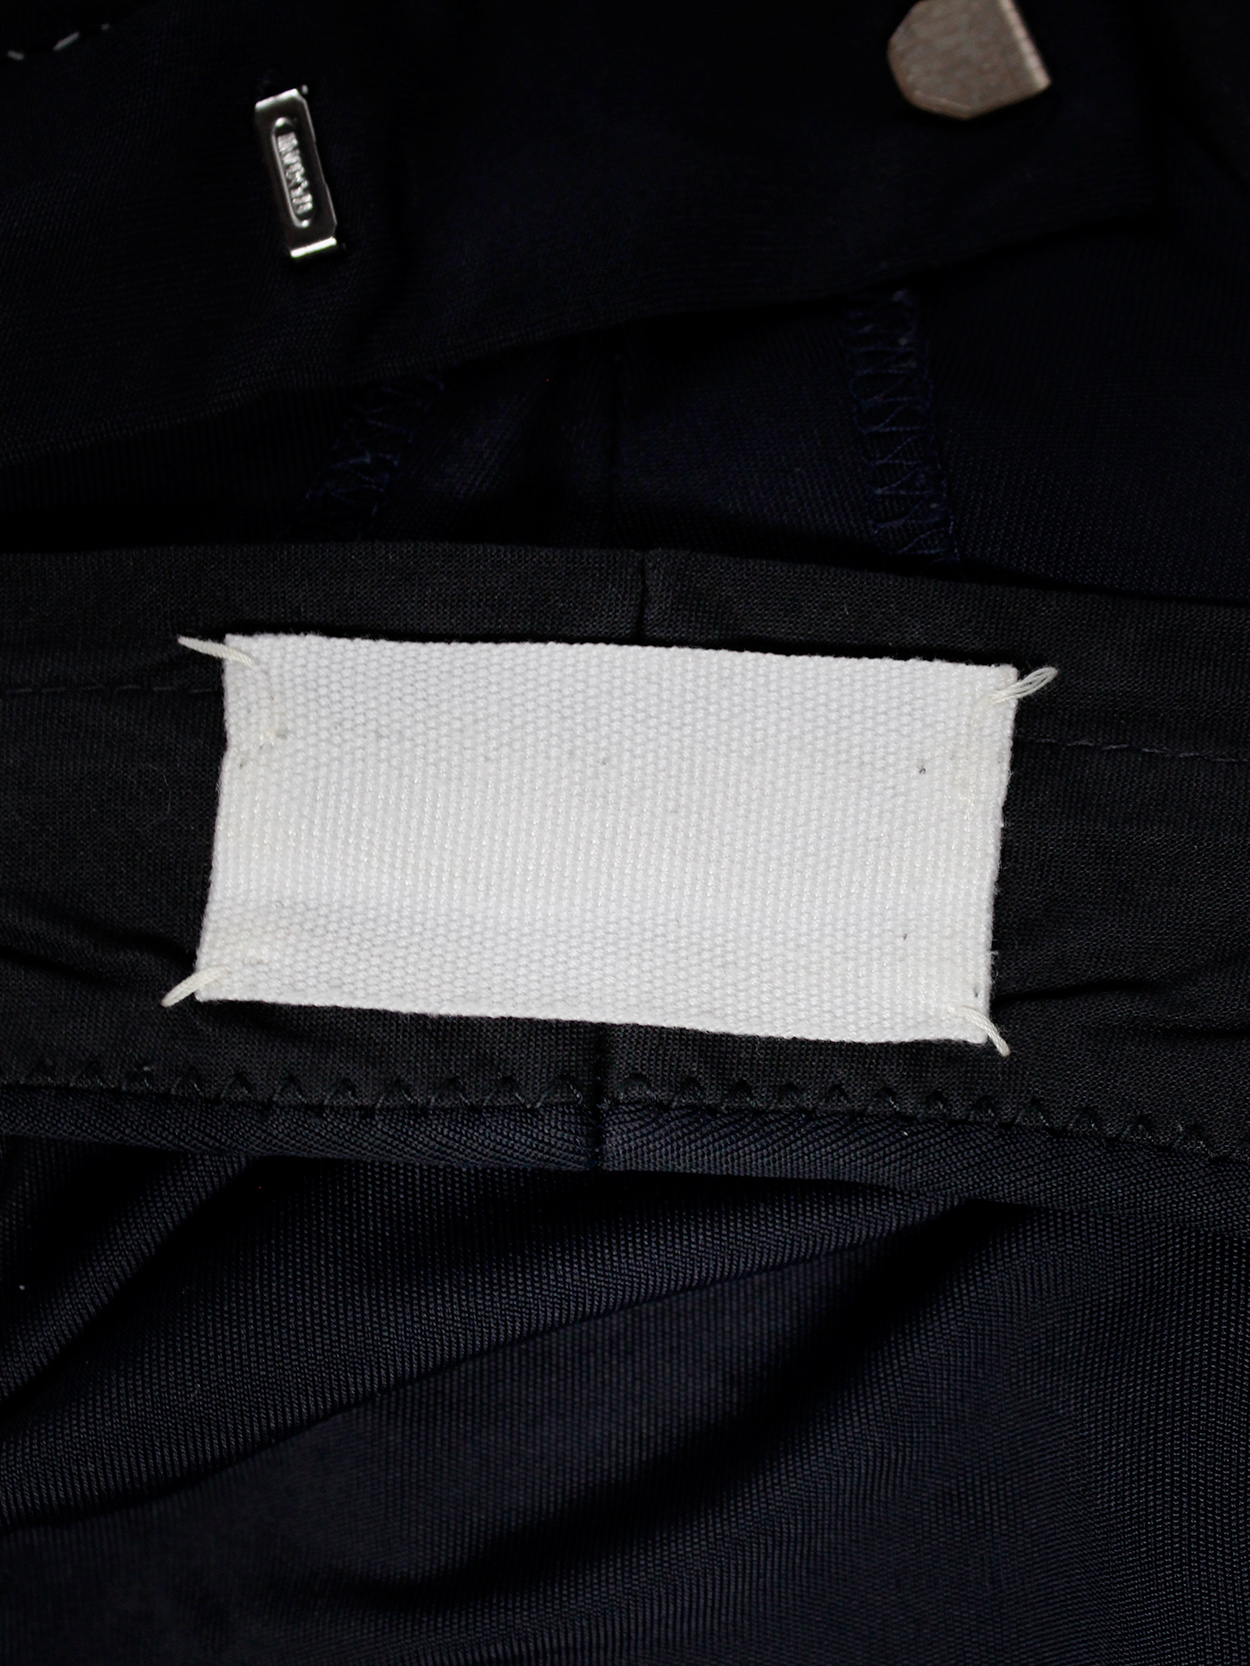 Maison Martin Margiela dark blue trousers with white exposed stitches ...